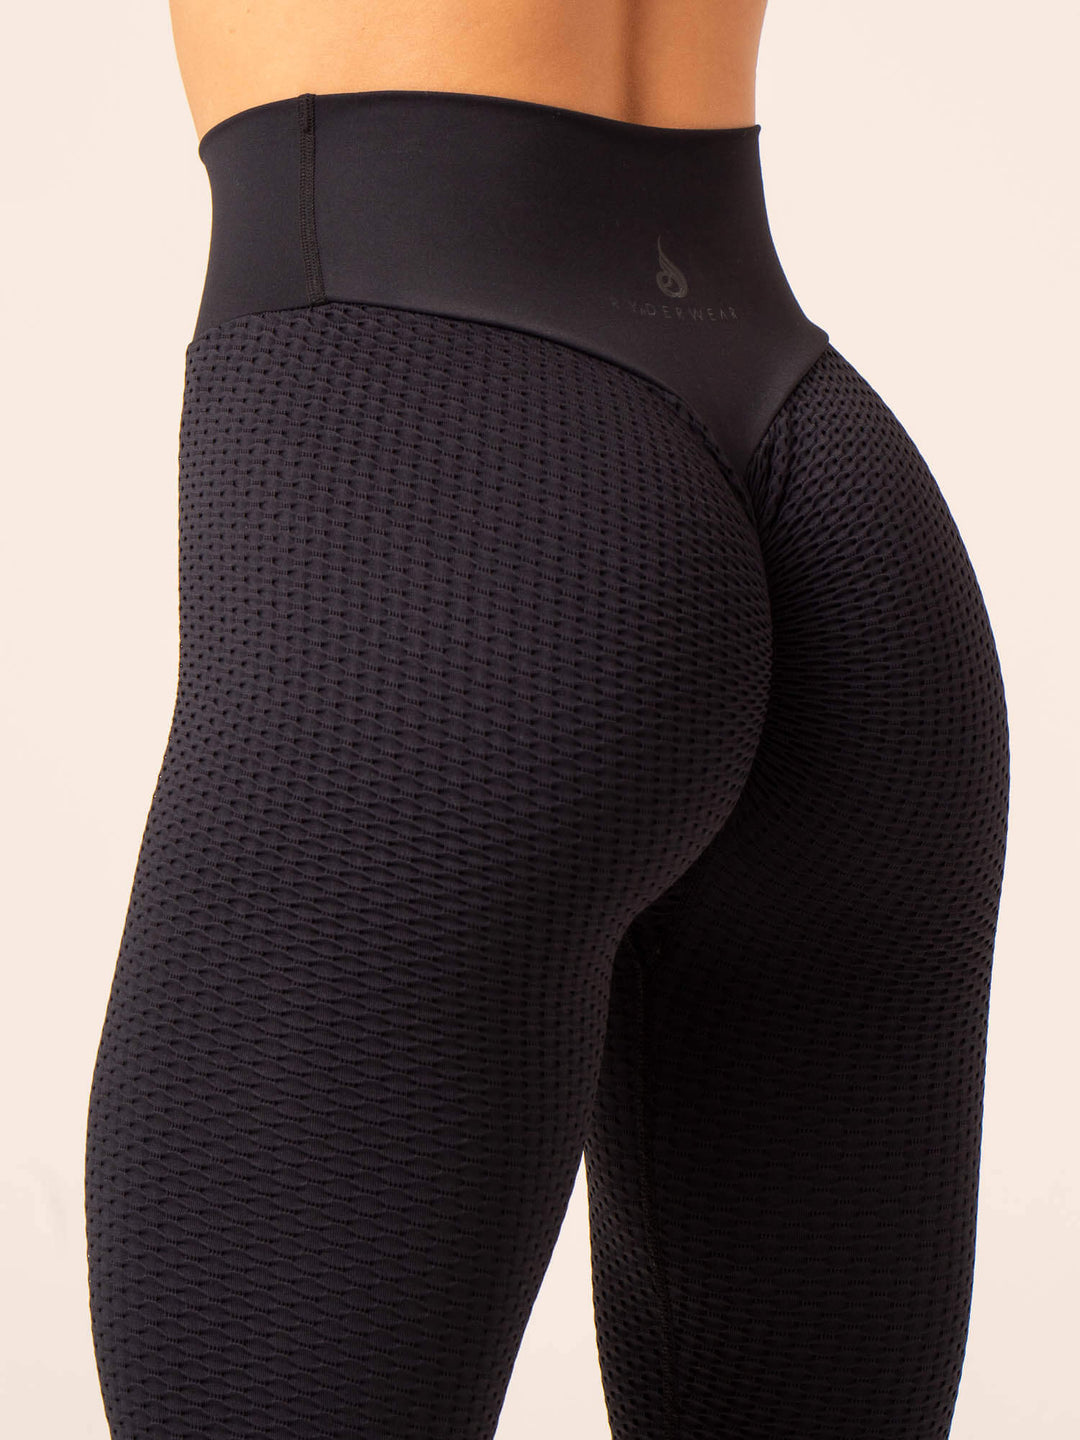 Honeycomb Scrunch Seamless Leggings - Black Clothing Ryderwear 